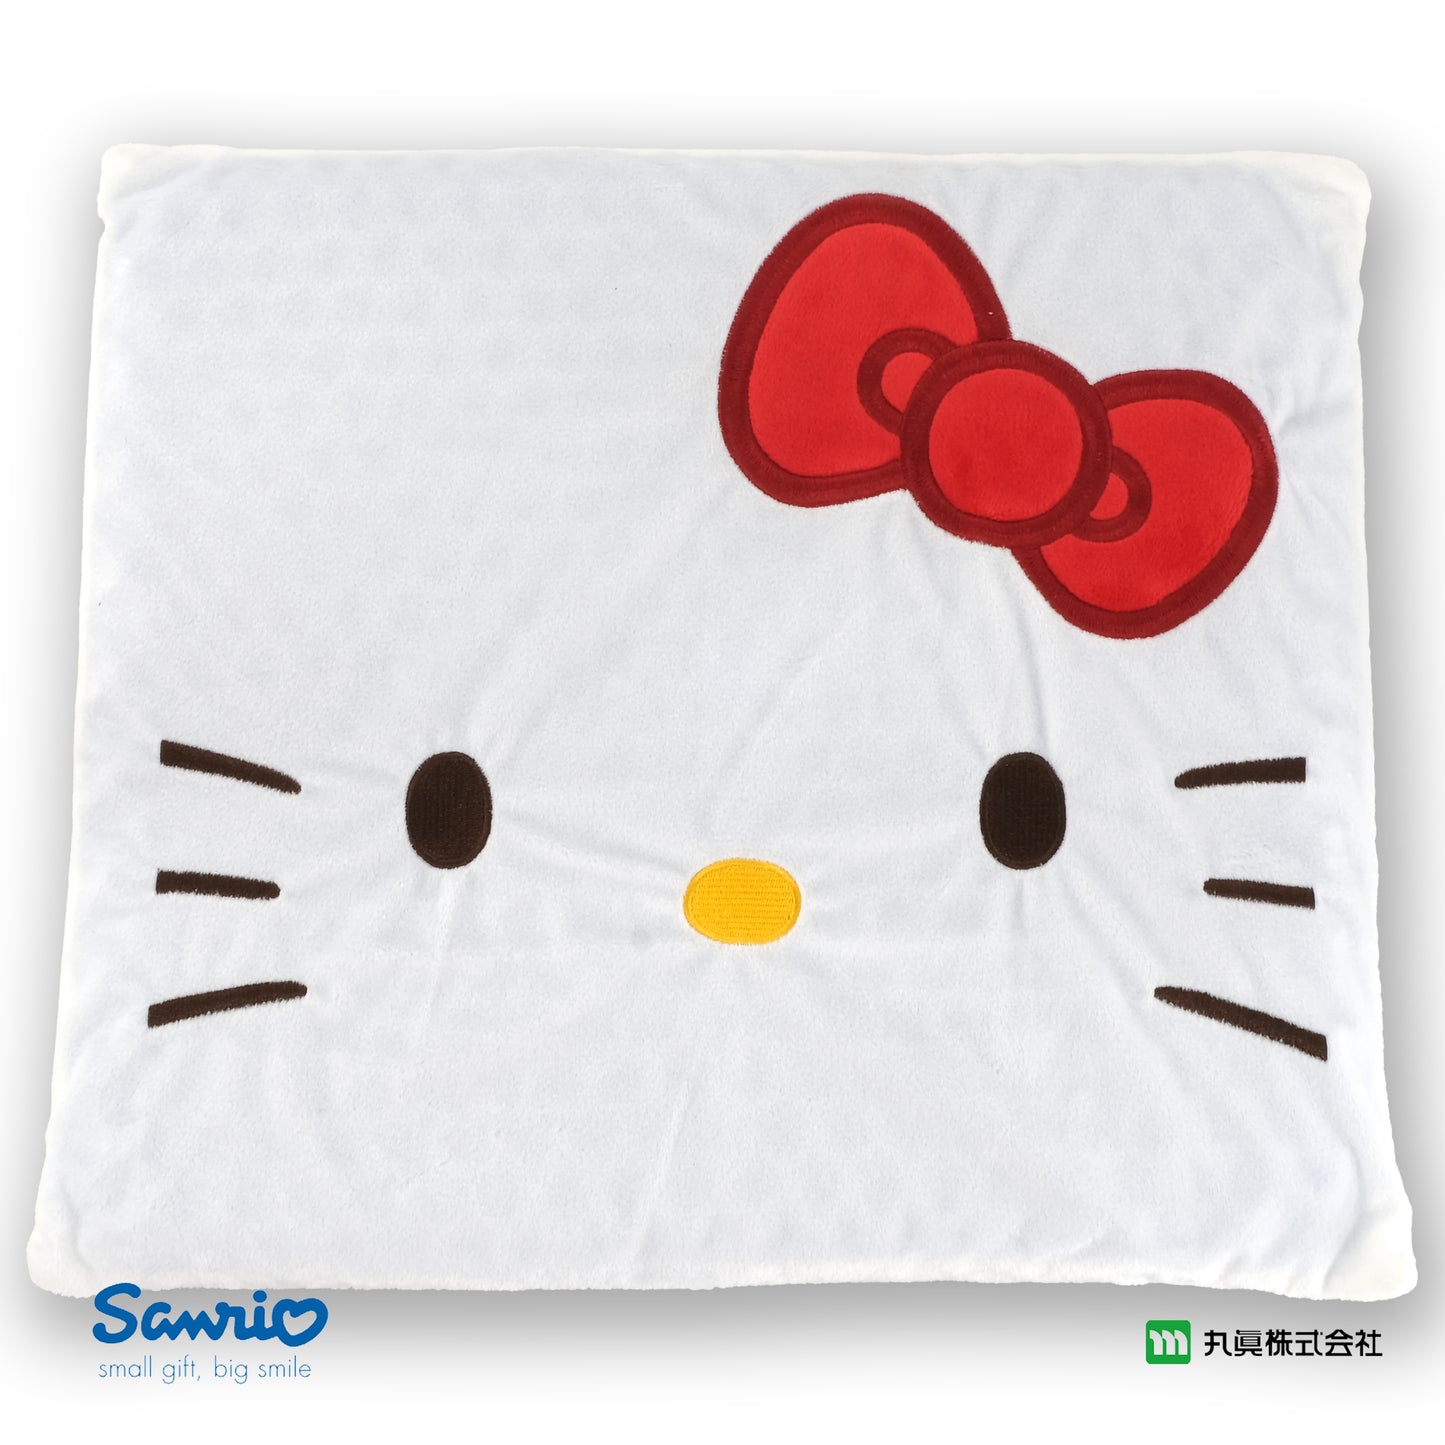 Sanrio® Hello Kitty Honeycomb Gel Seat Cushion